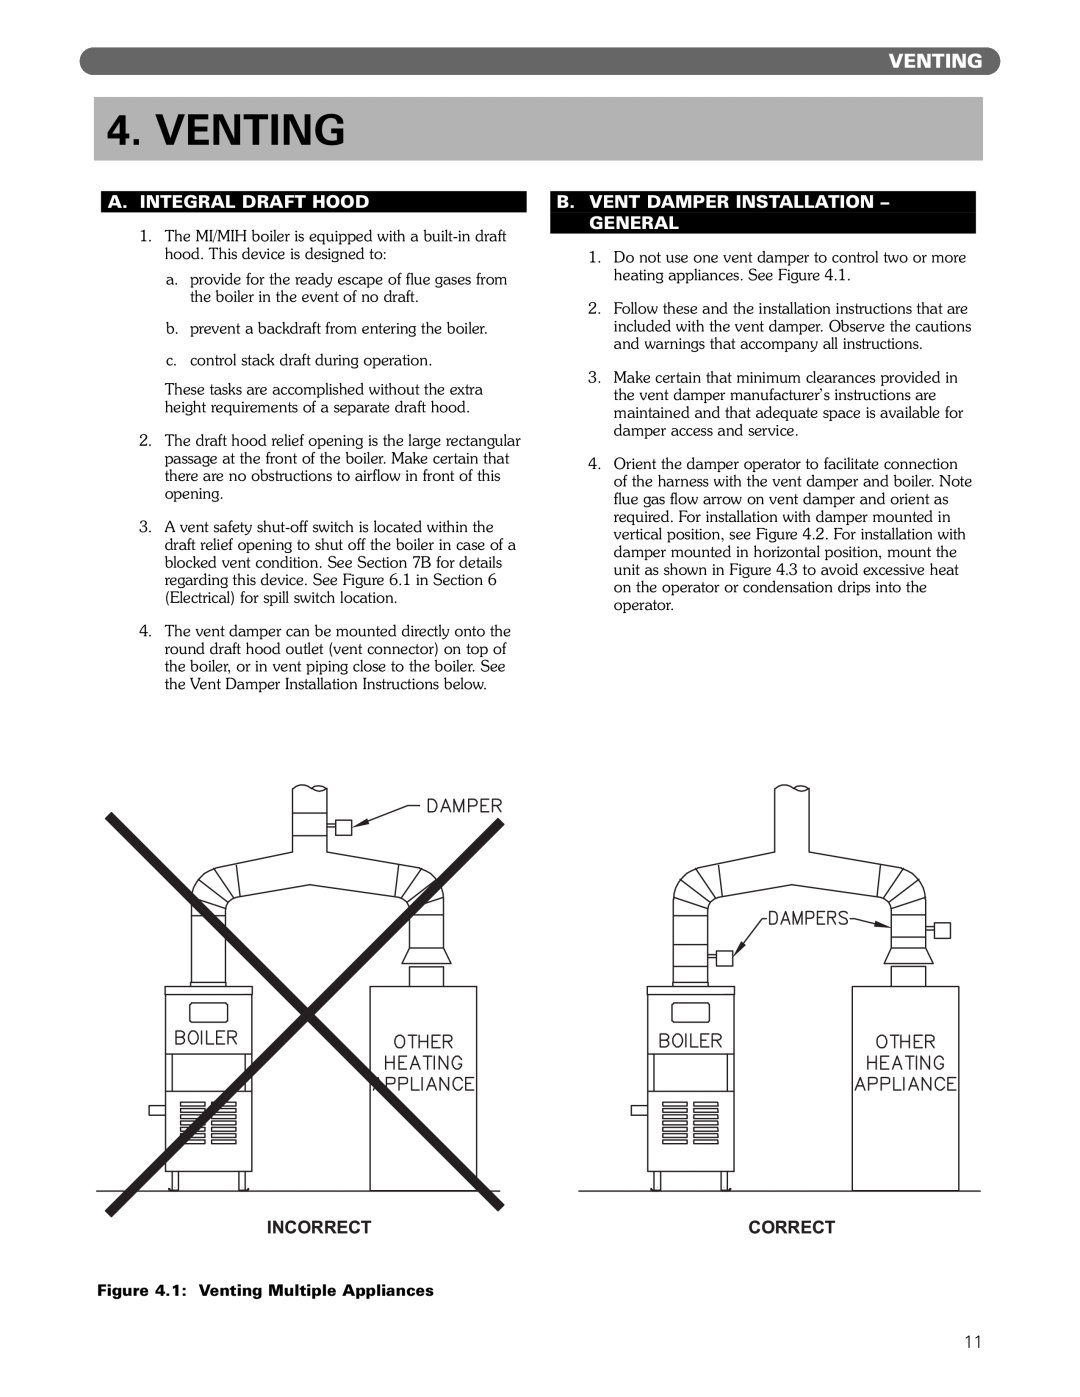 PB Heat MI/MIH series manual Venting, A.Integral Draft Hood, B.Vent Damper Installation - General 